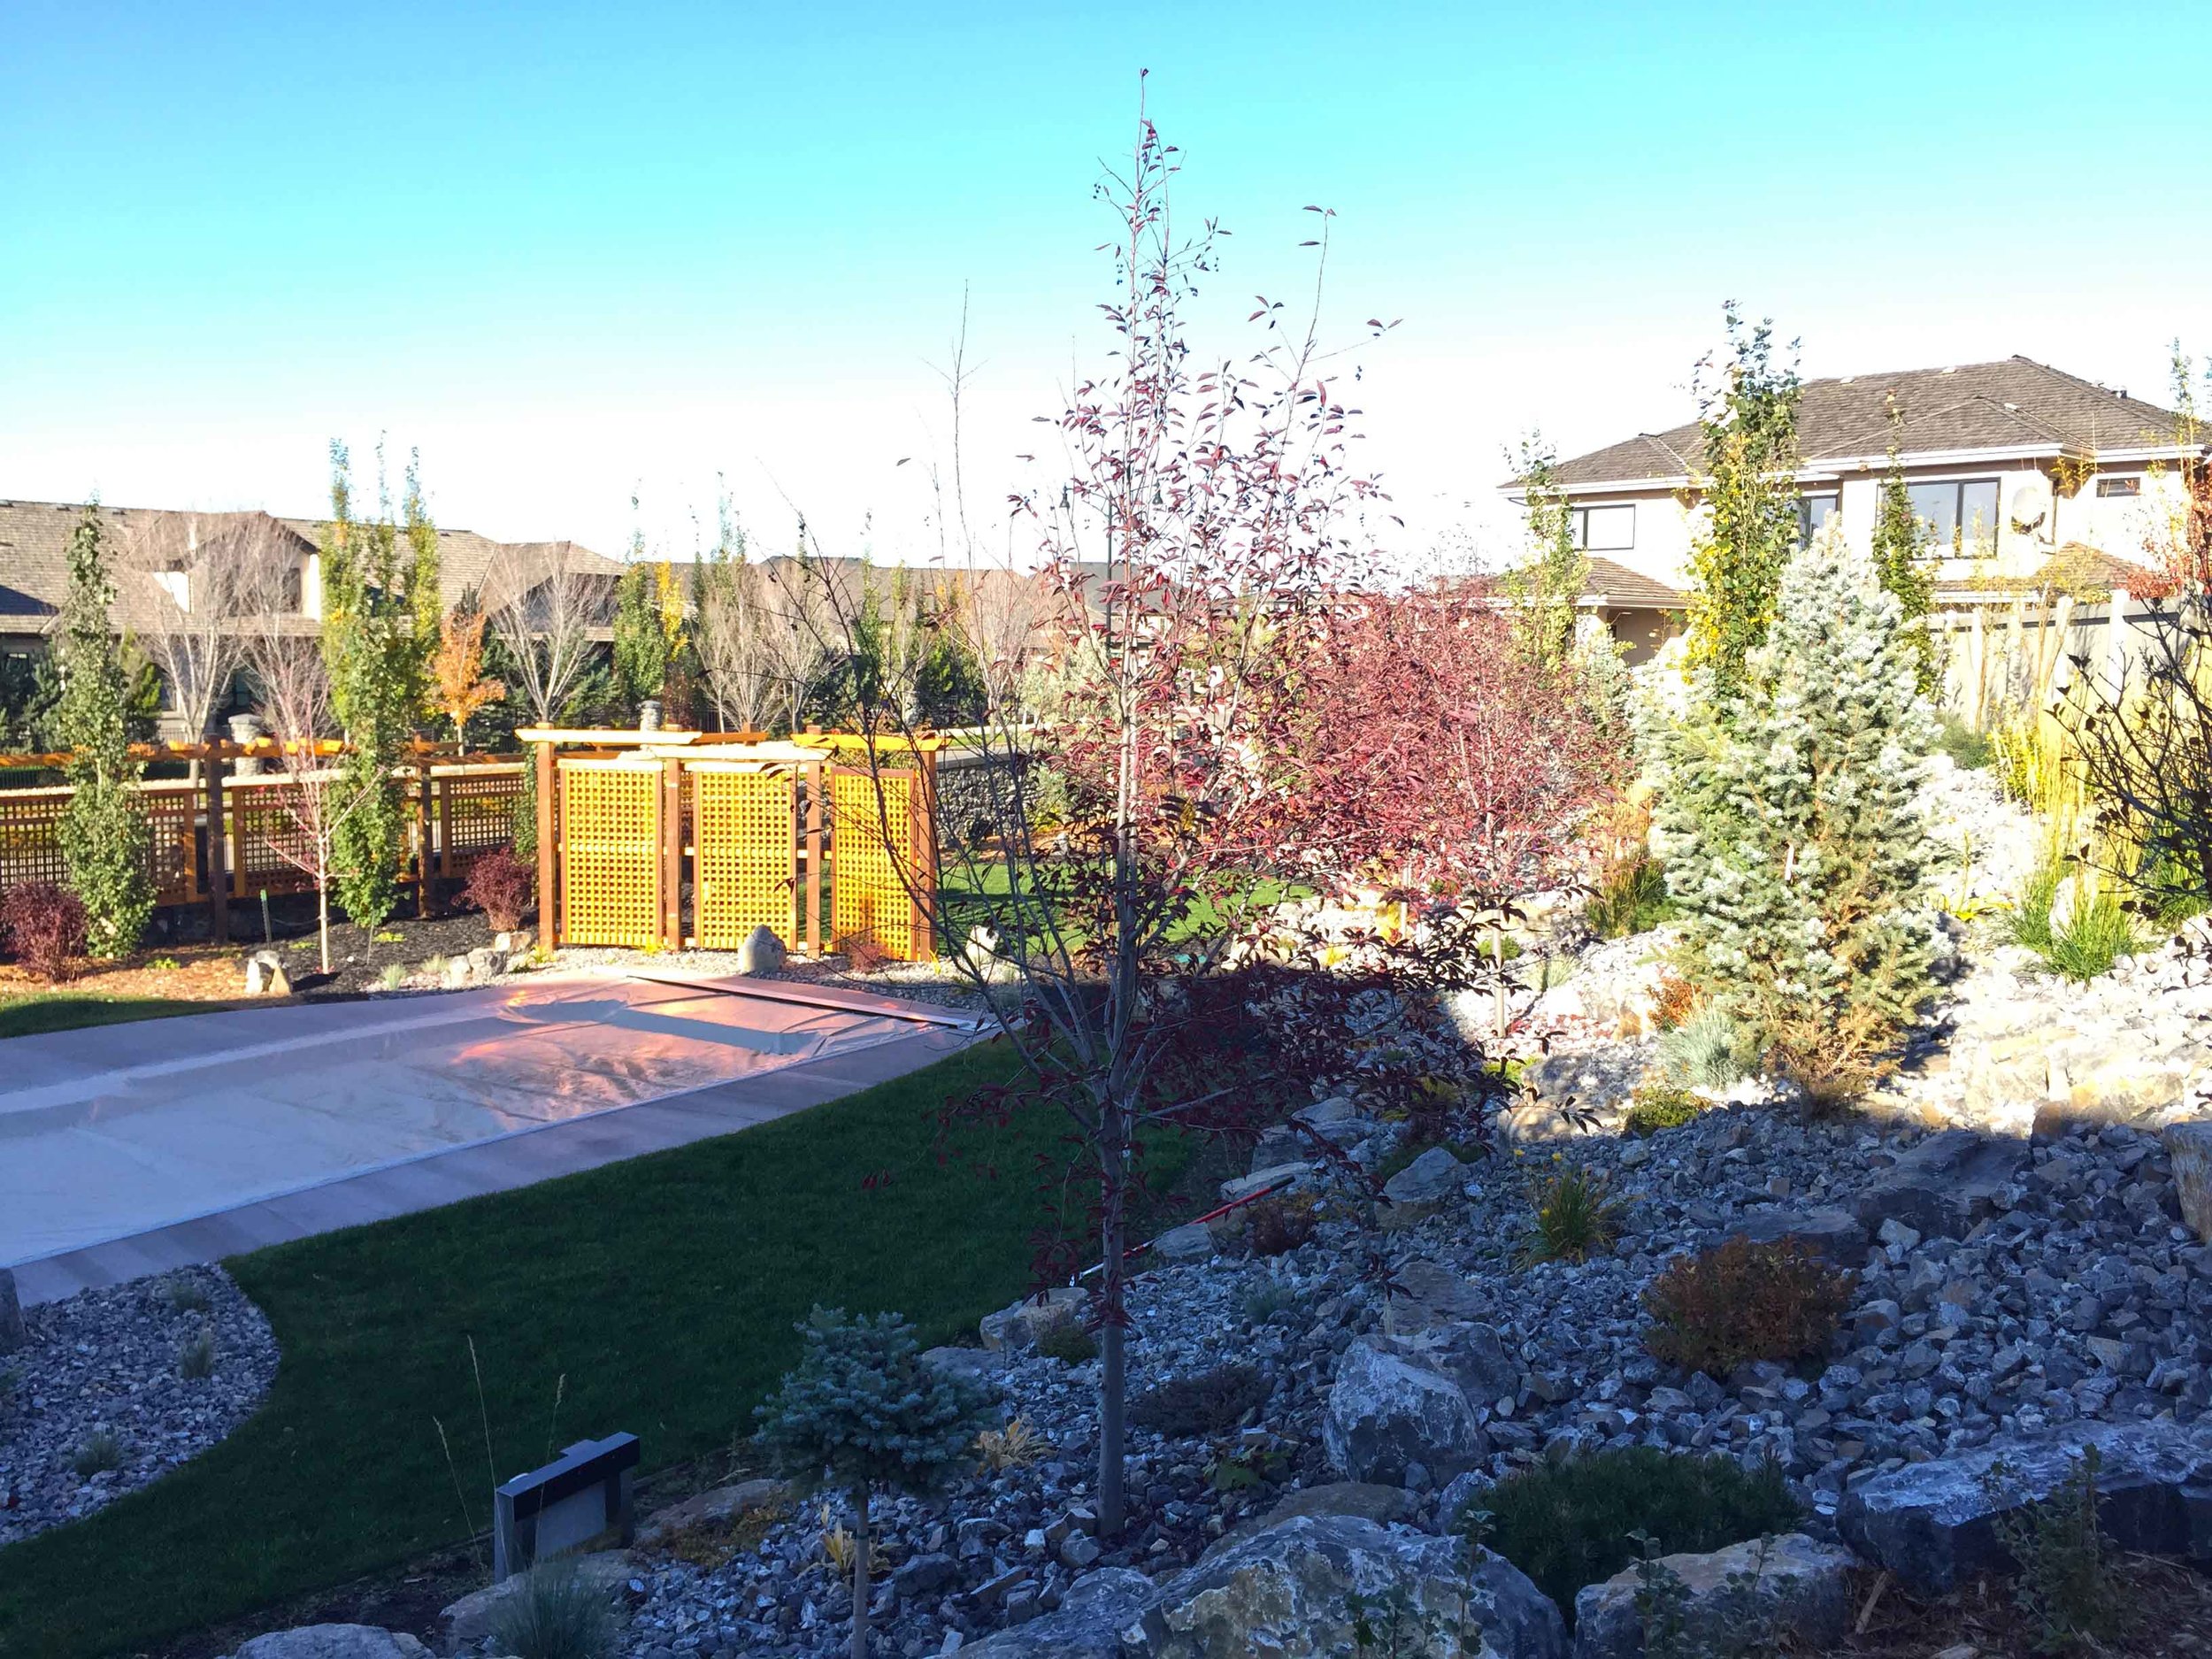 Landscape Backyard Garden Ideas in Edmonton (Copy)